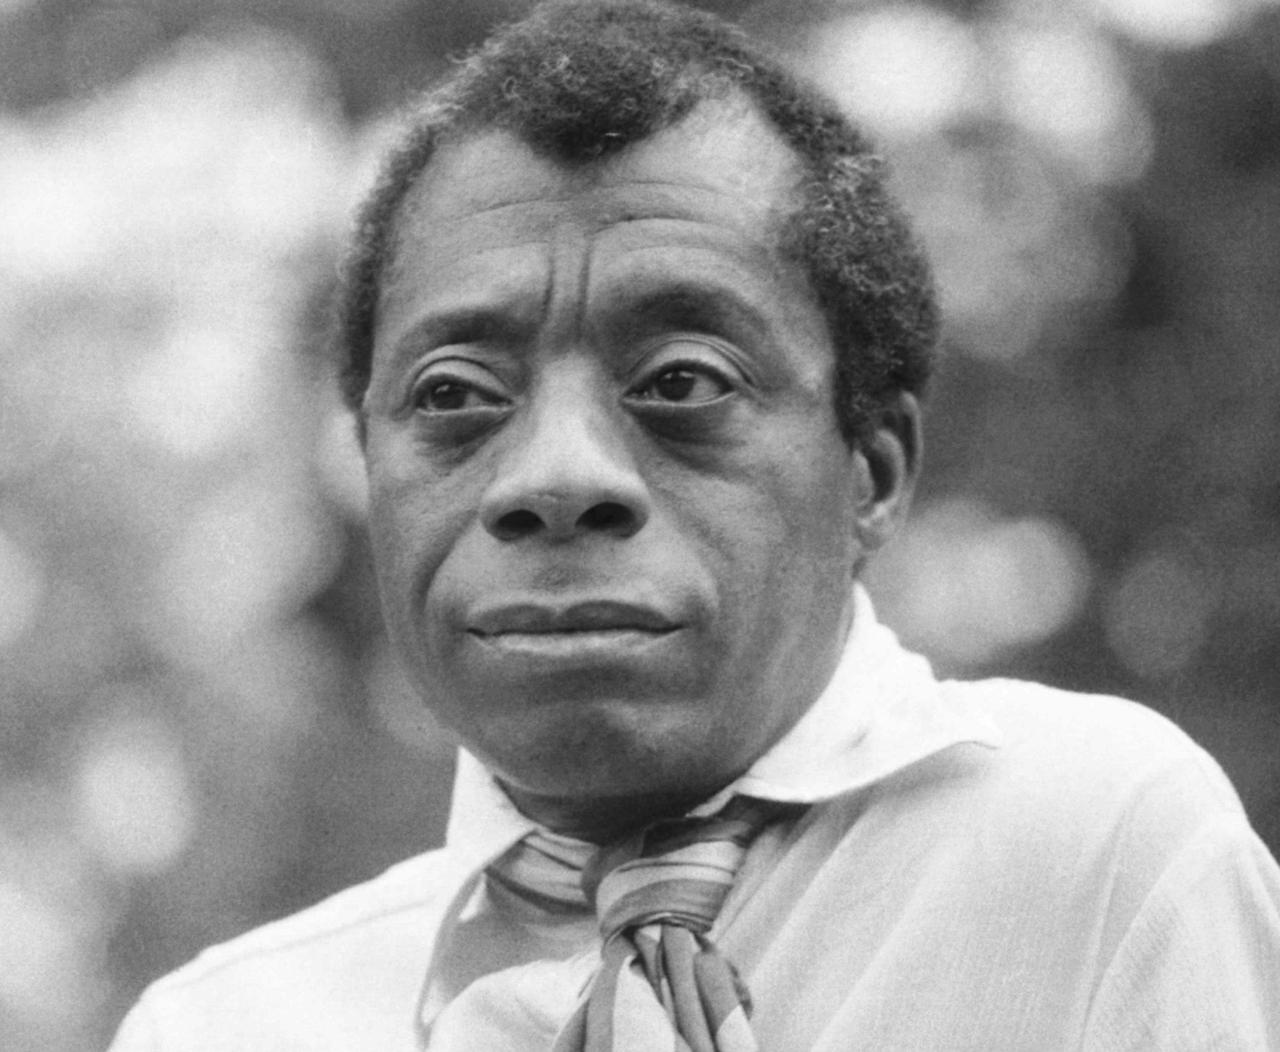 "James Baldwin 37 Allan Warren" by Allan warren is licensed under CC BY-SA 3.0.